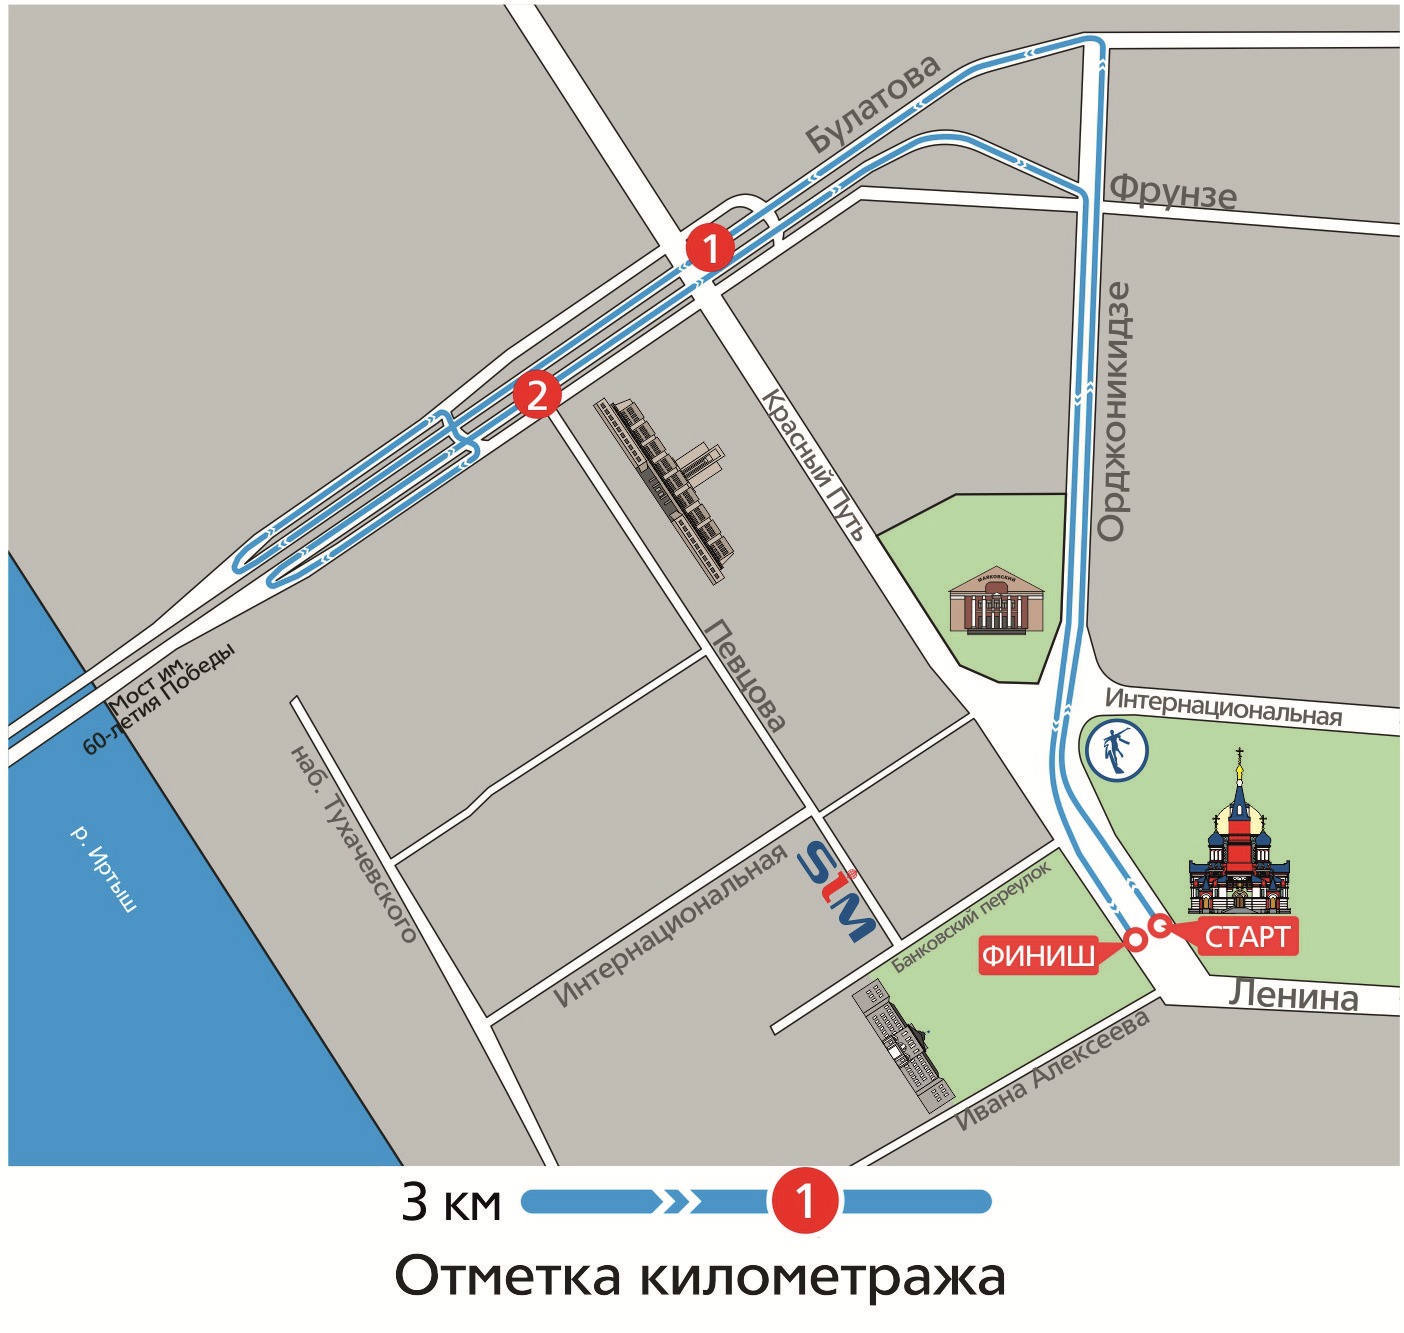 сибирский марафон трасса 3 км